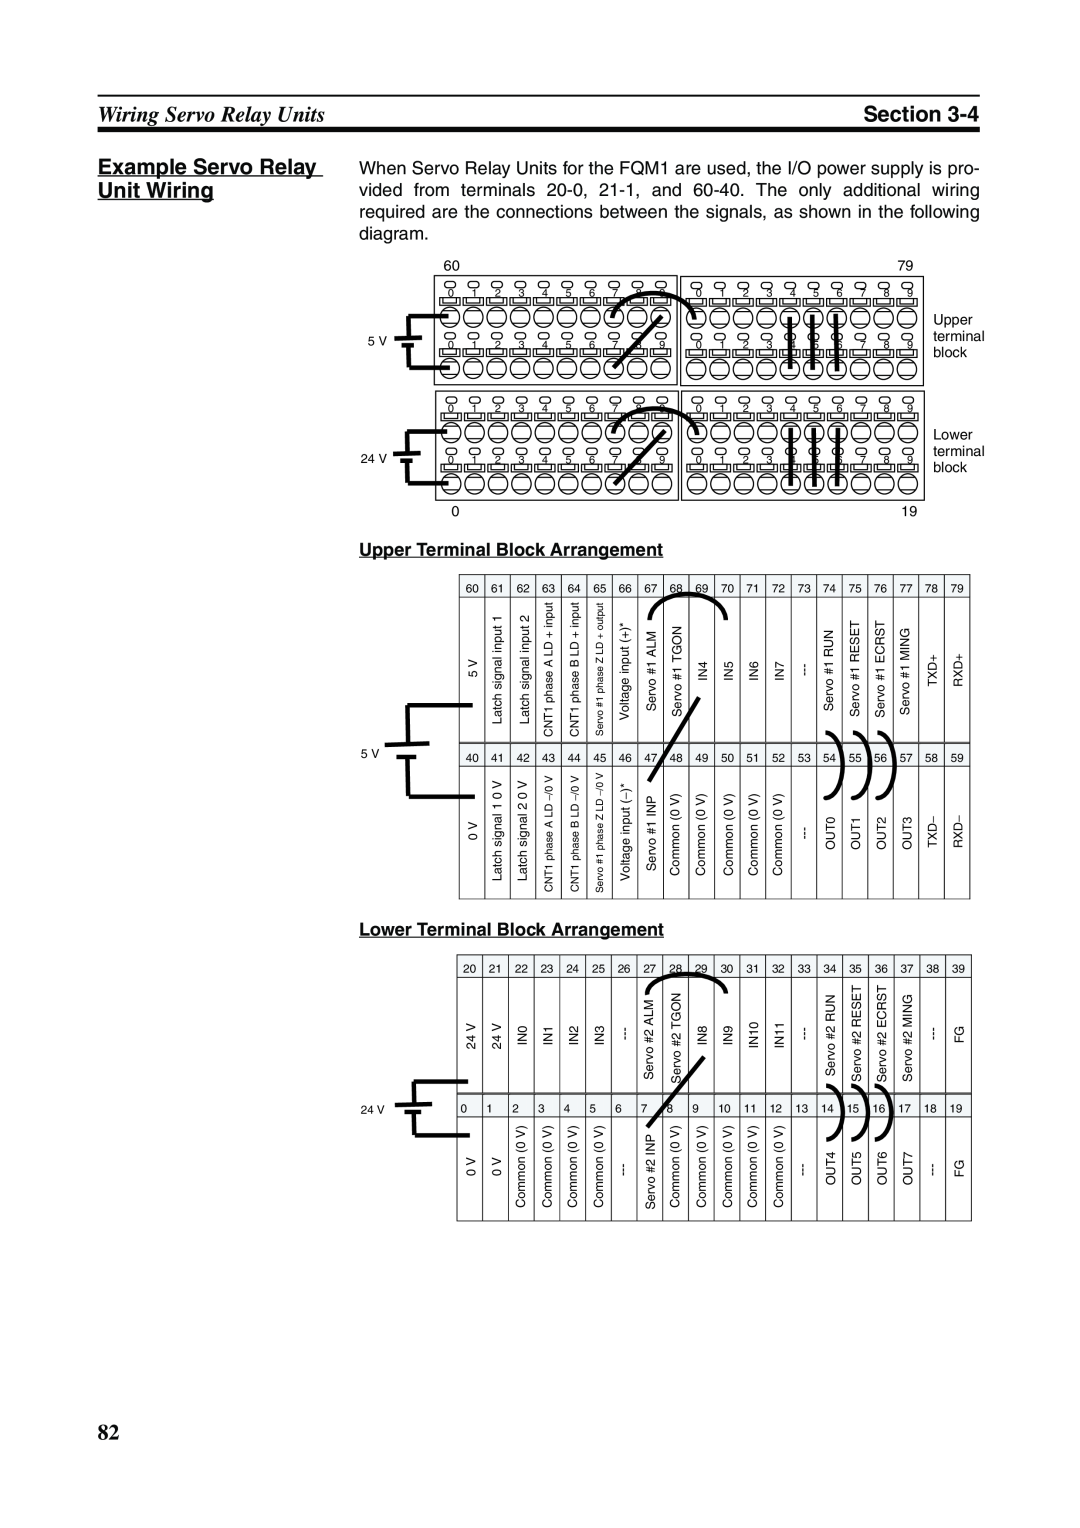 Omron FQM1-CM001 Wiring Servo Relay Units, Section, Example Servo Relay Unit Wiring, Upper Terminal Block Arrangement 